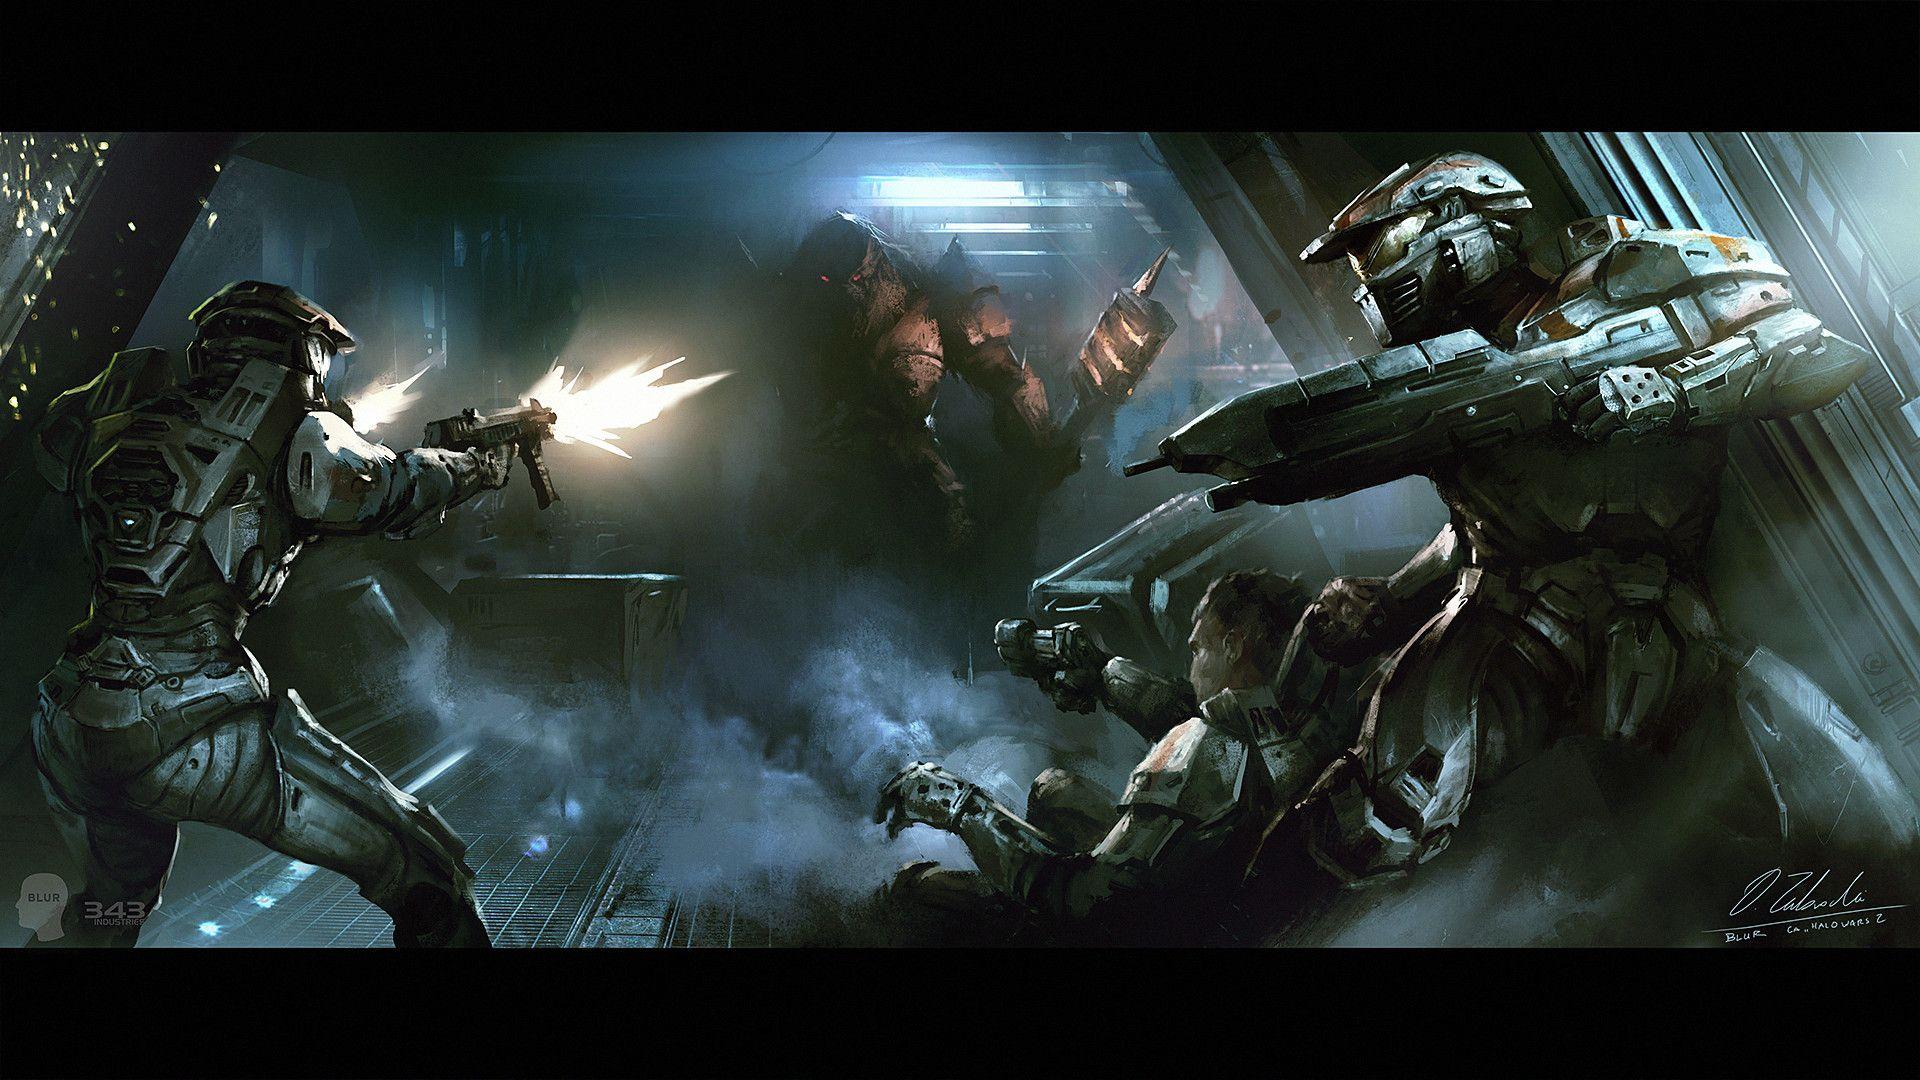 Halo Wars 2 trailer: Escape, Darek Zabrocki